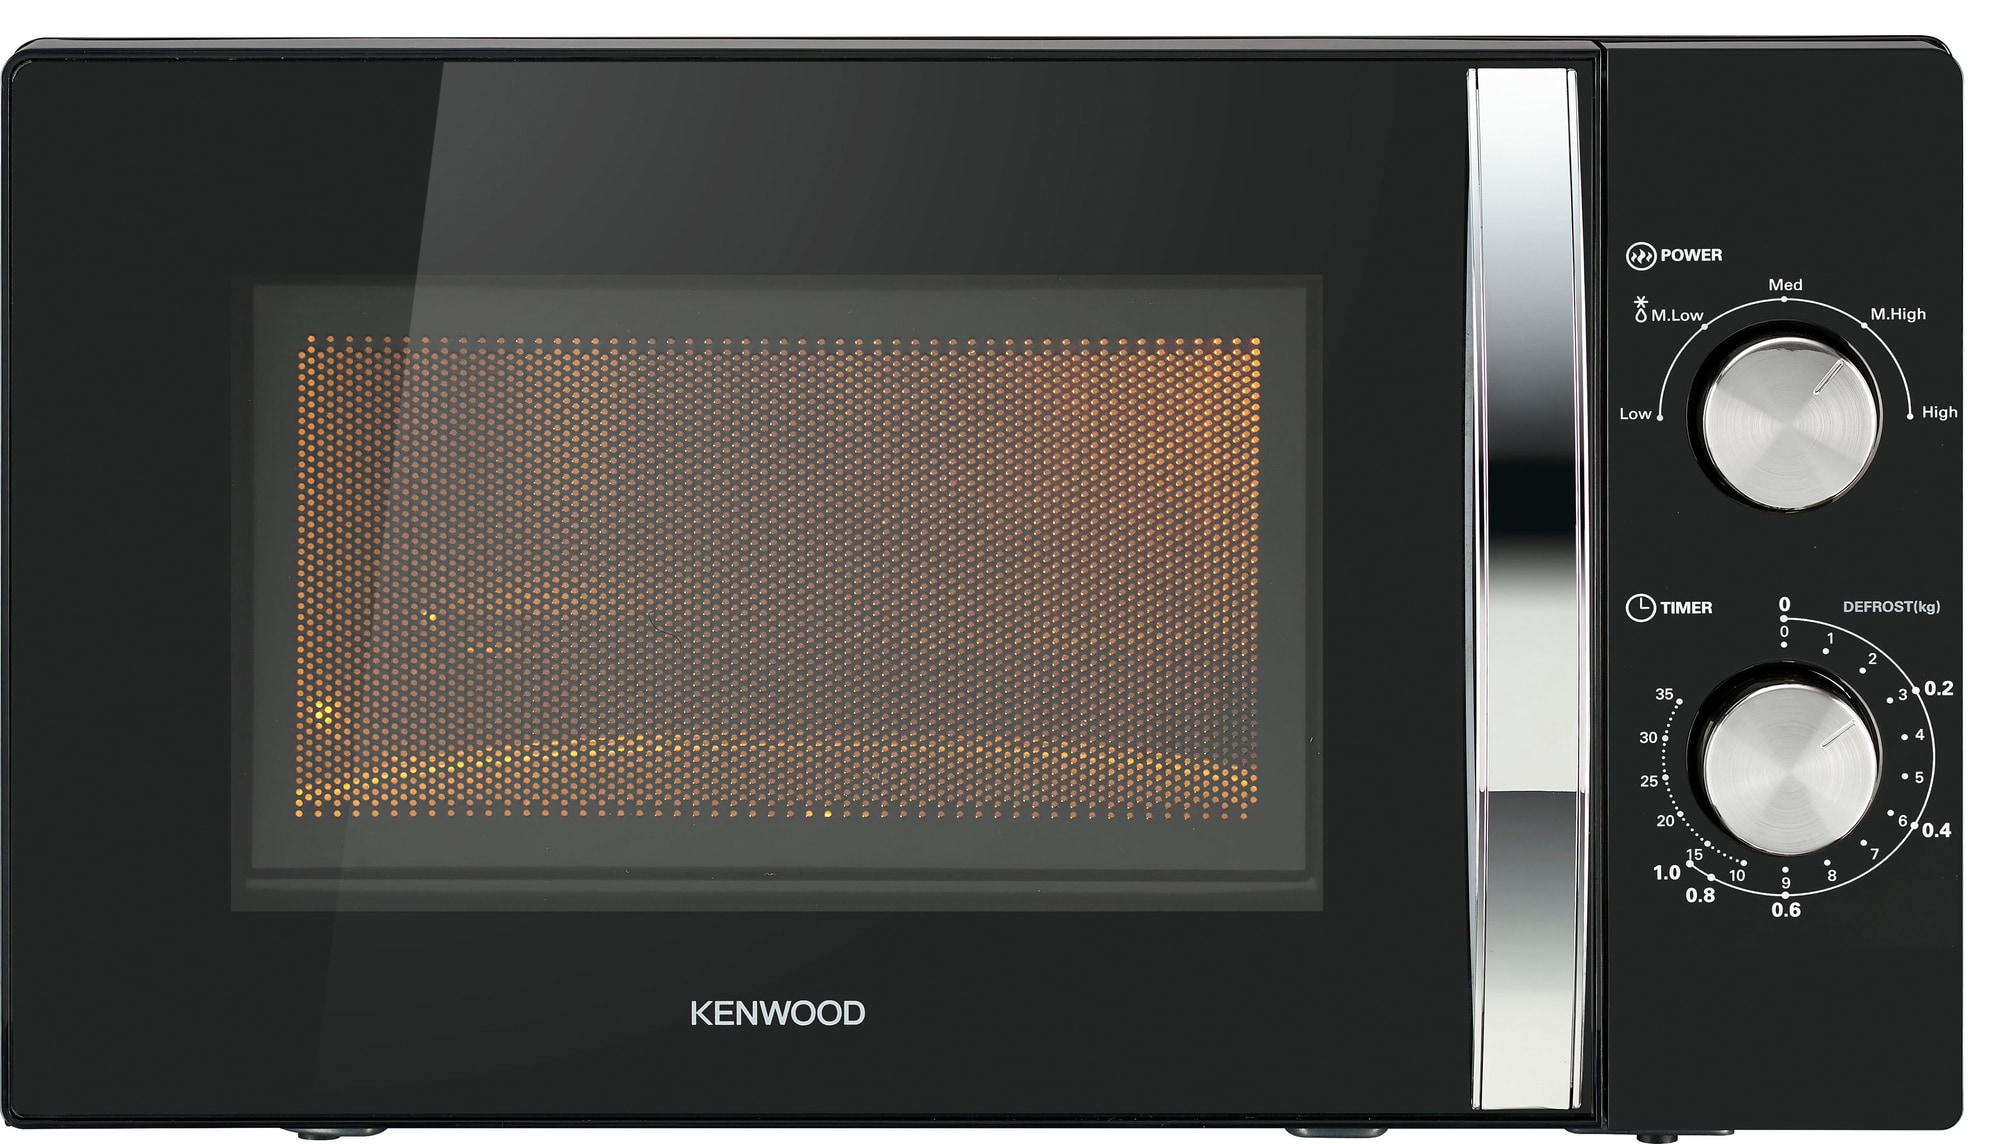 Kenwood mikroovn K20MB21E (sort)